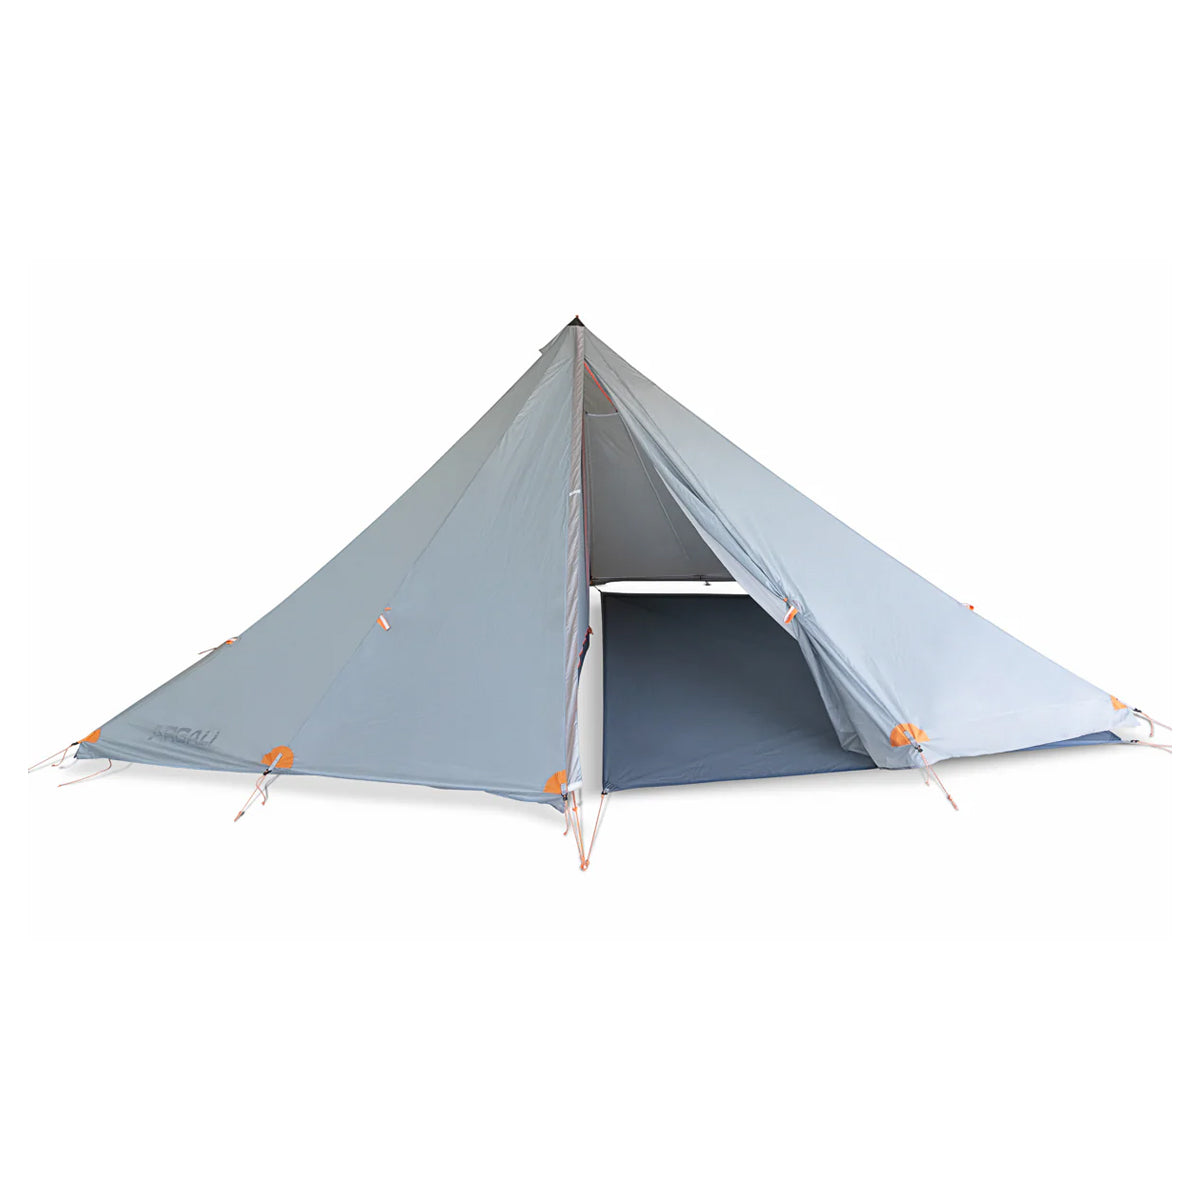 Argali Selway 6P Tent in  by GOHUNT | Argali - GOHUNT Shop